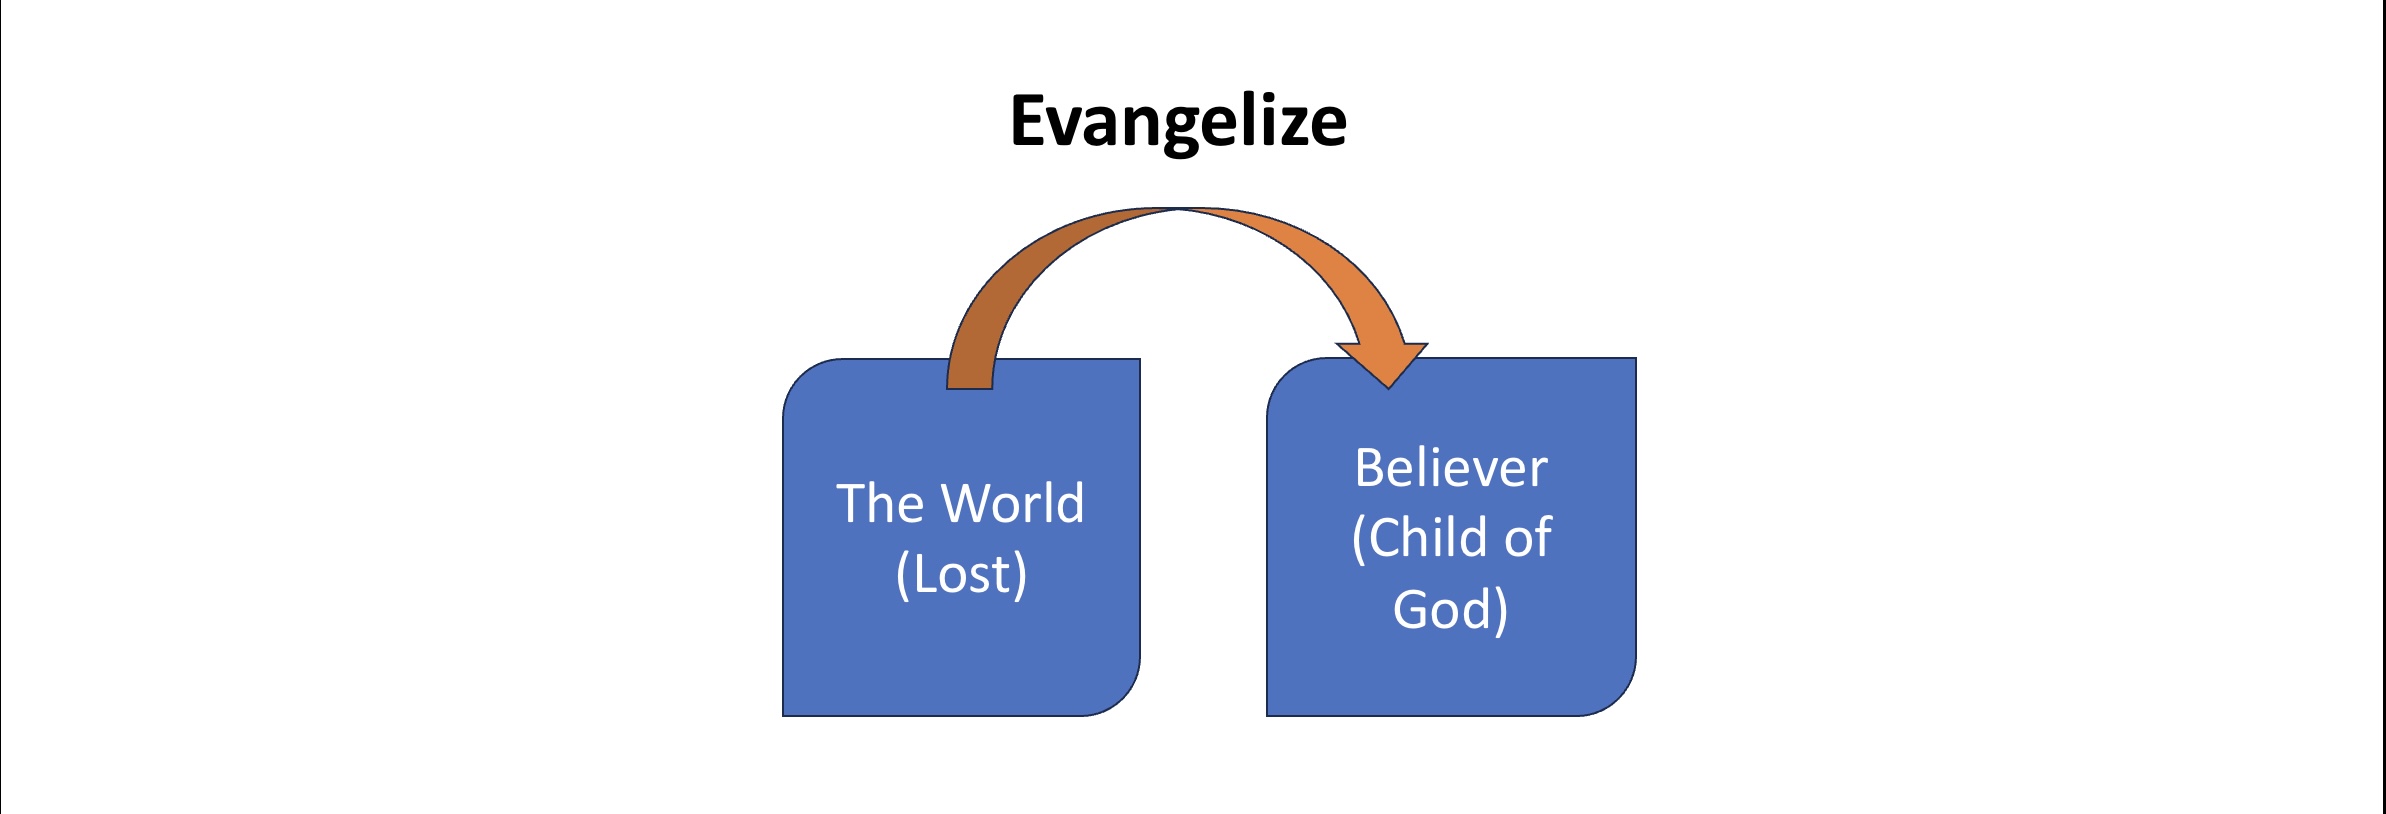 Evangelize diagram